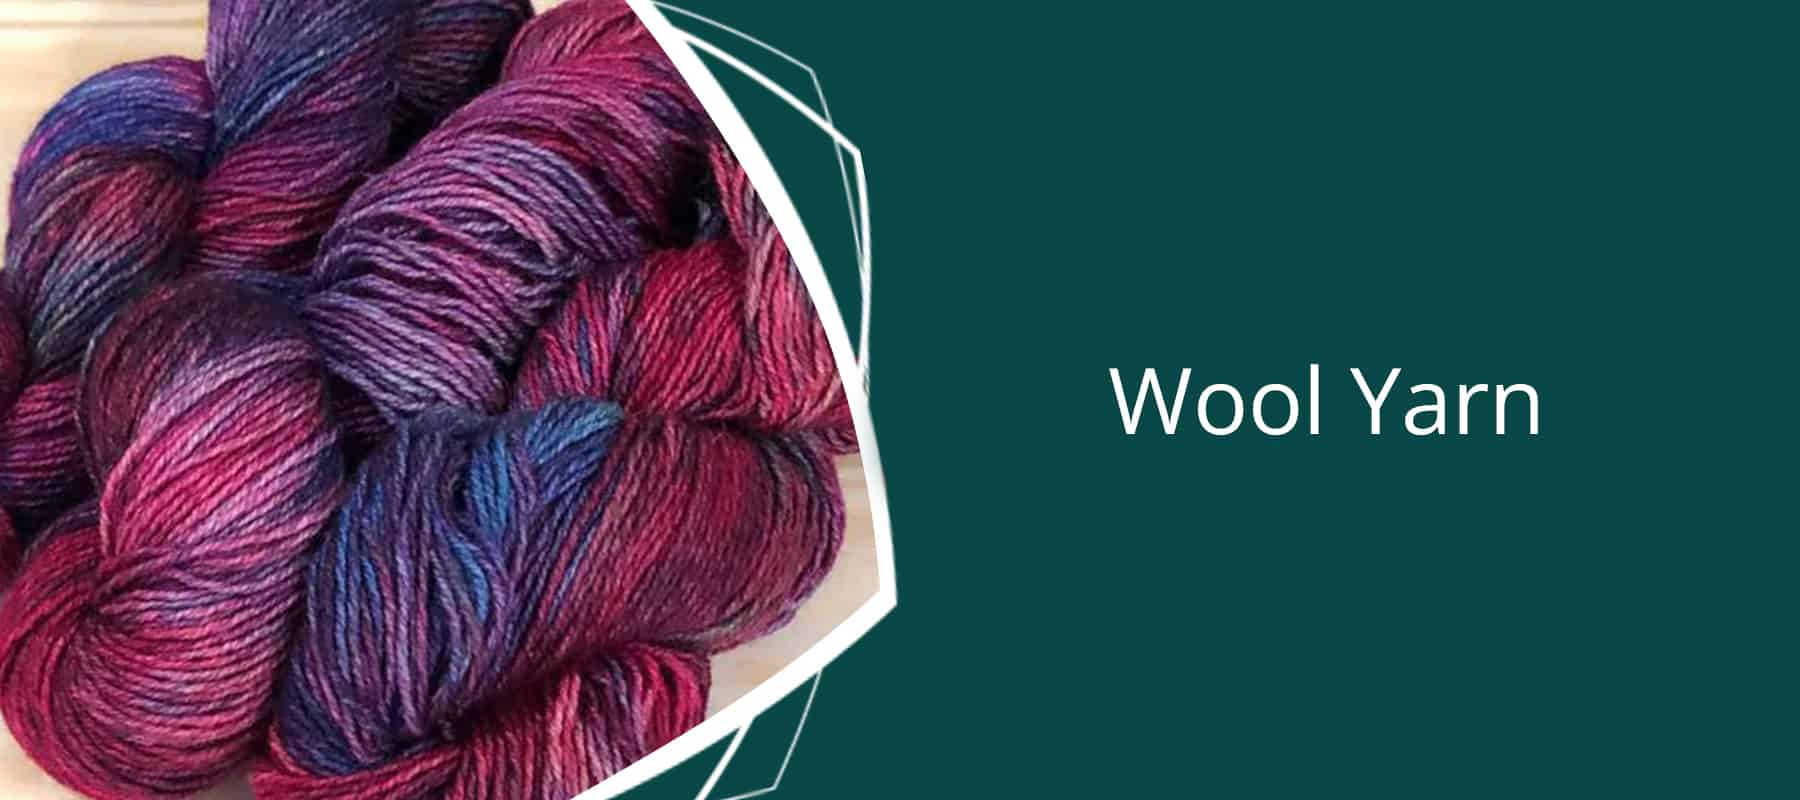 Wool Yarn Australia: Knitting & Weaving Handicraft Art - Thread Collective Australia 